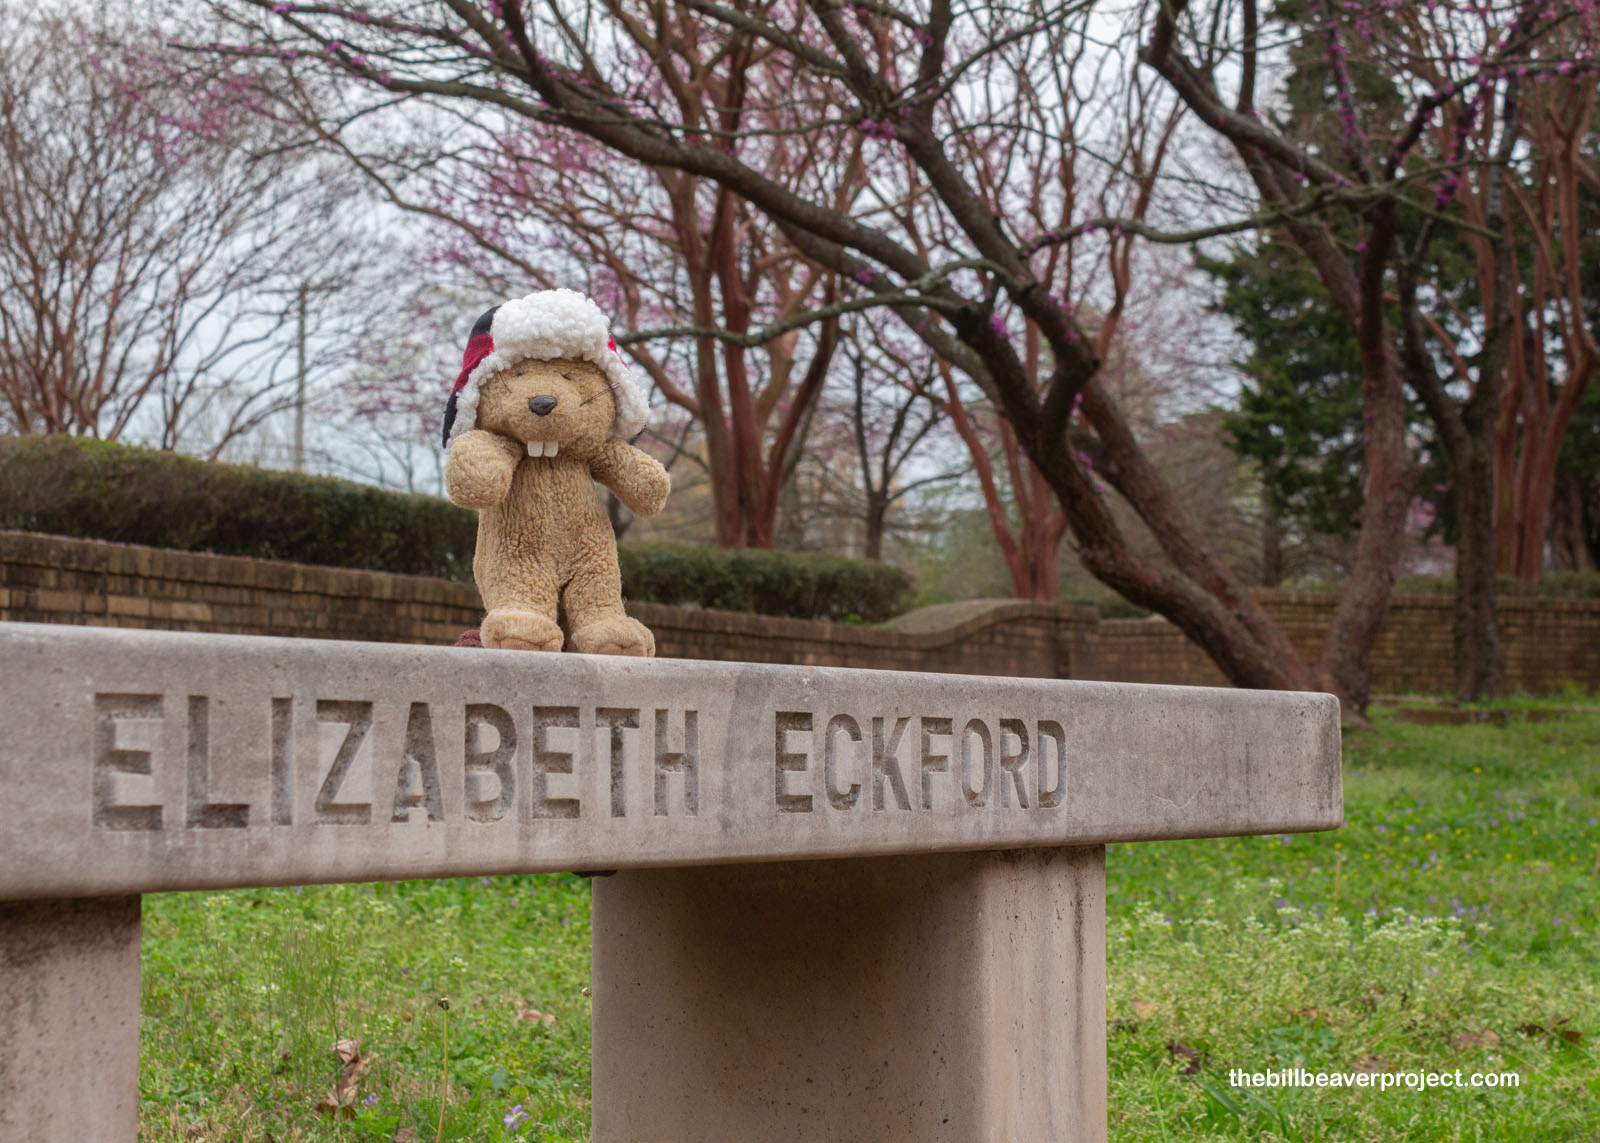 A memorial bench to Elizabeth Eckford!